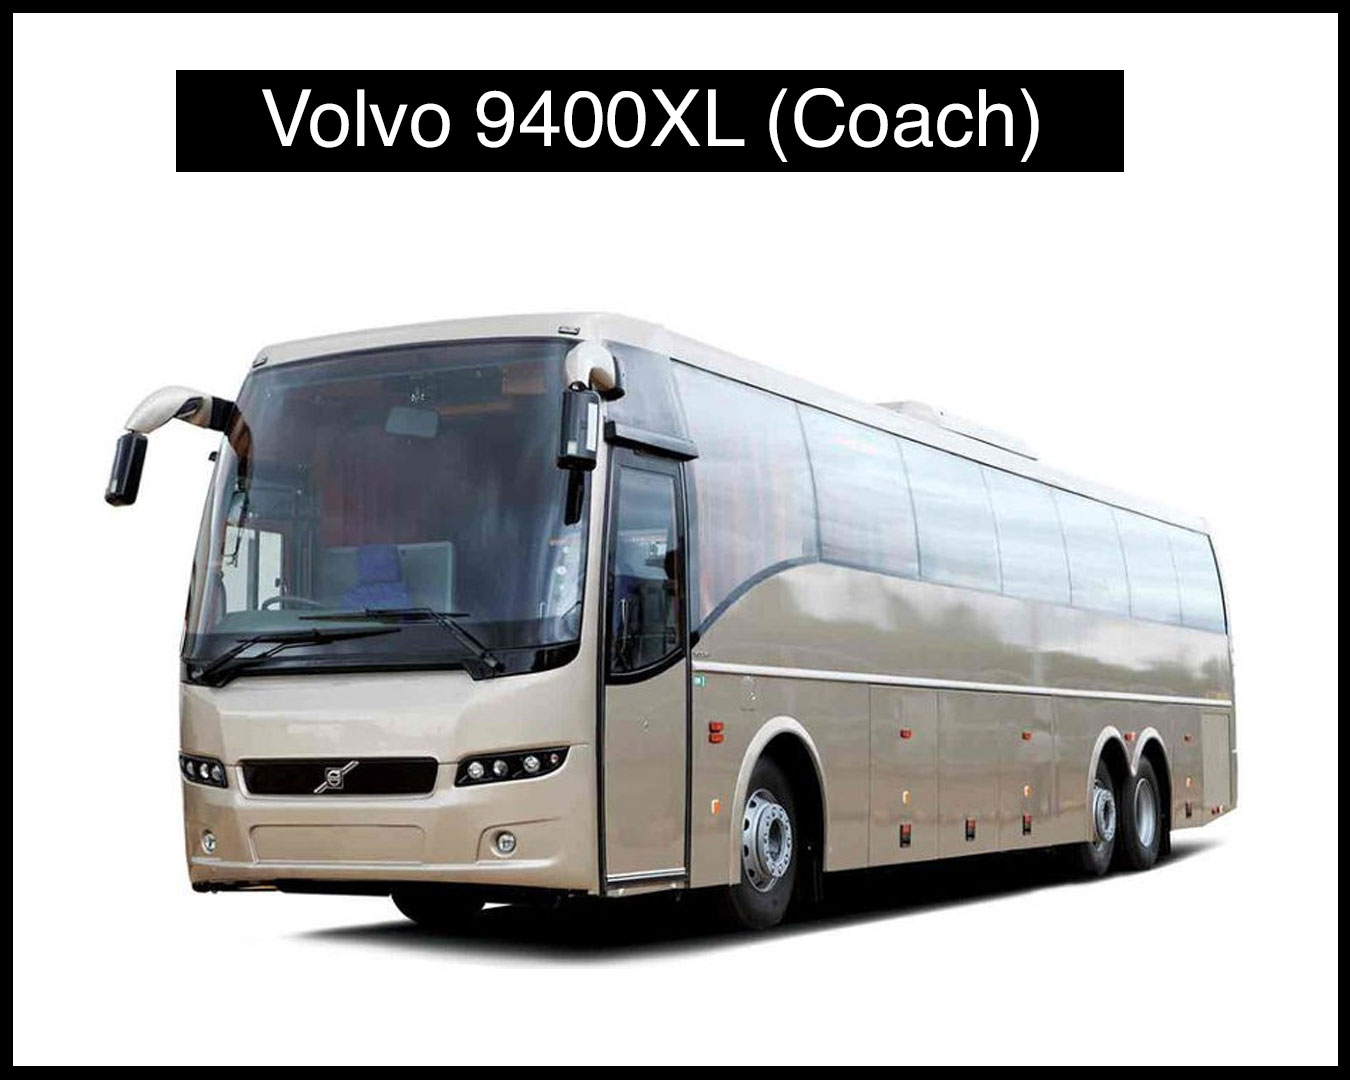 Volvo bus price -9400XL-(Coach)